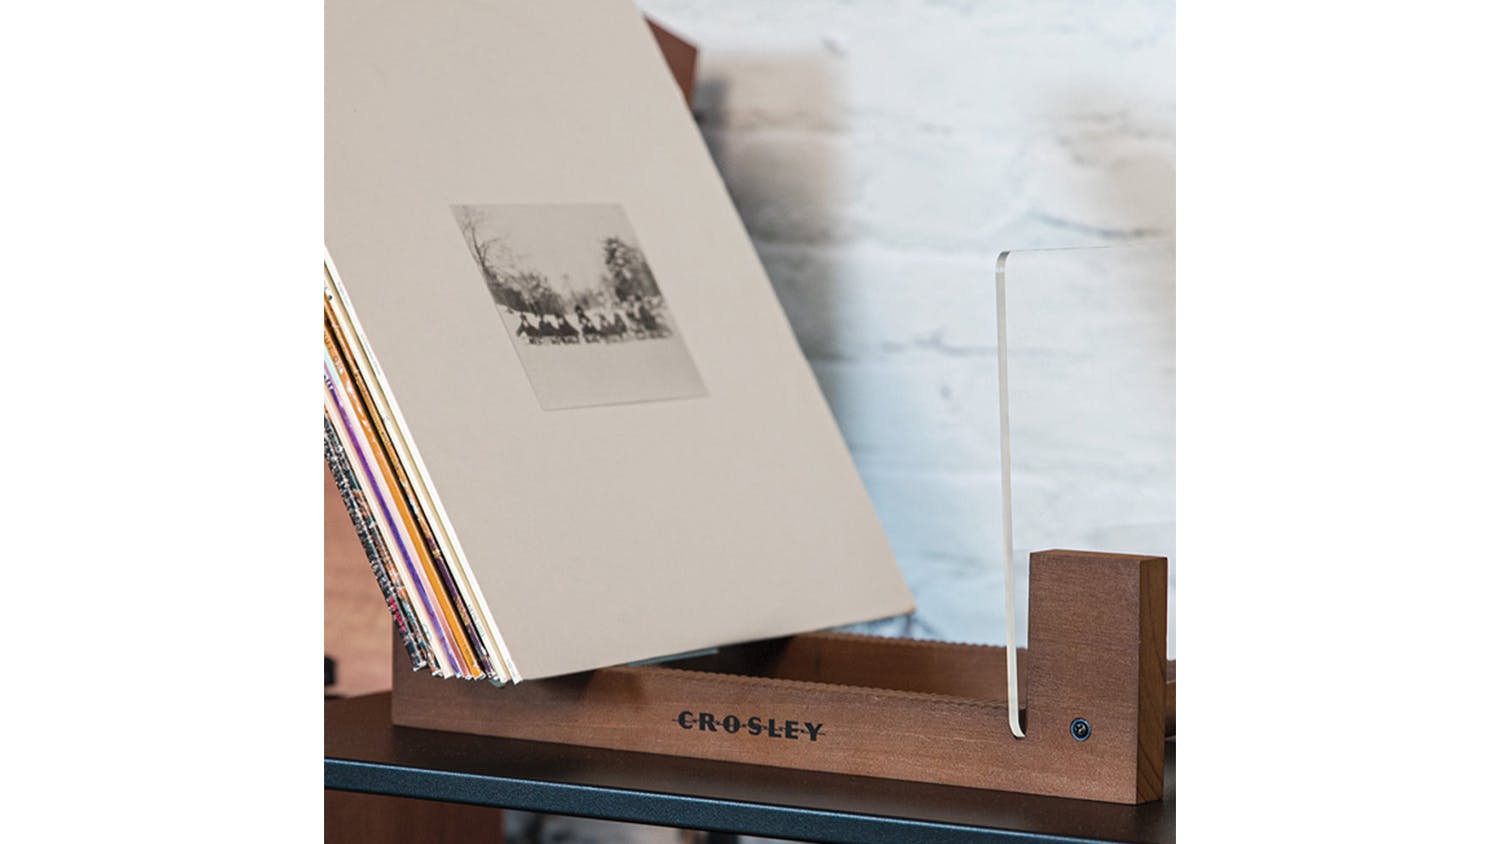 Crosley Record Storage Display Stand w/ John Coltrane - Blue Train Vinyl Album